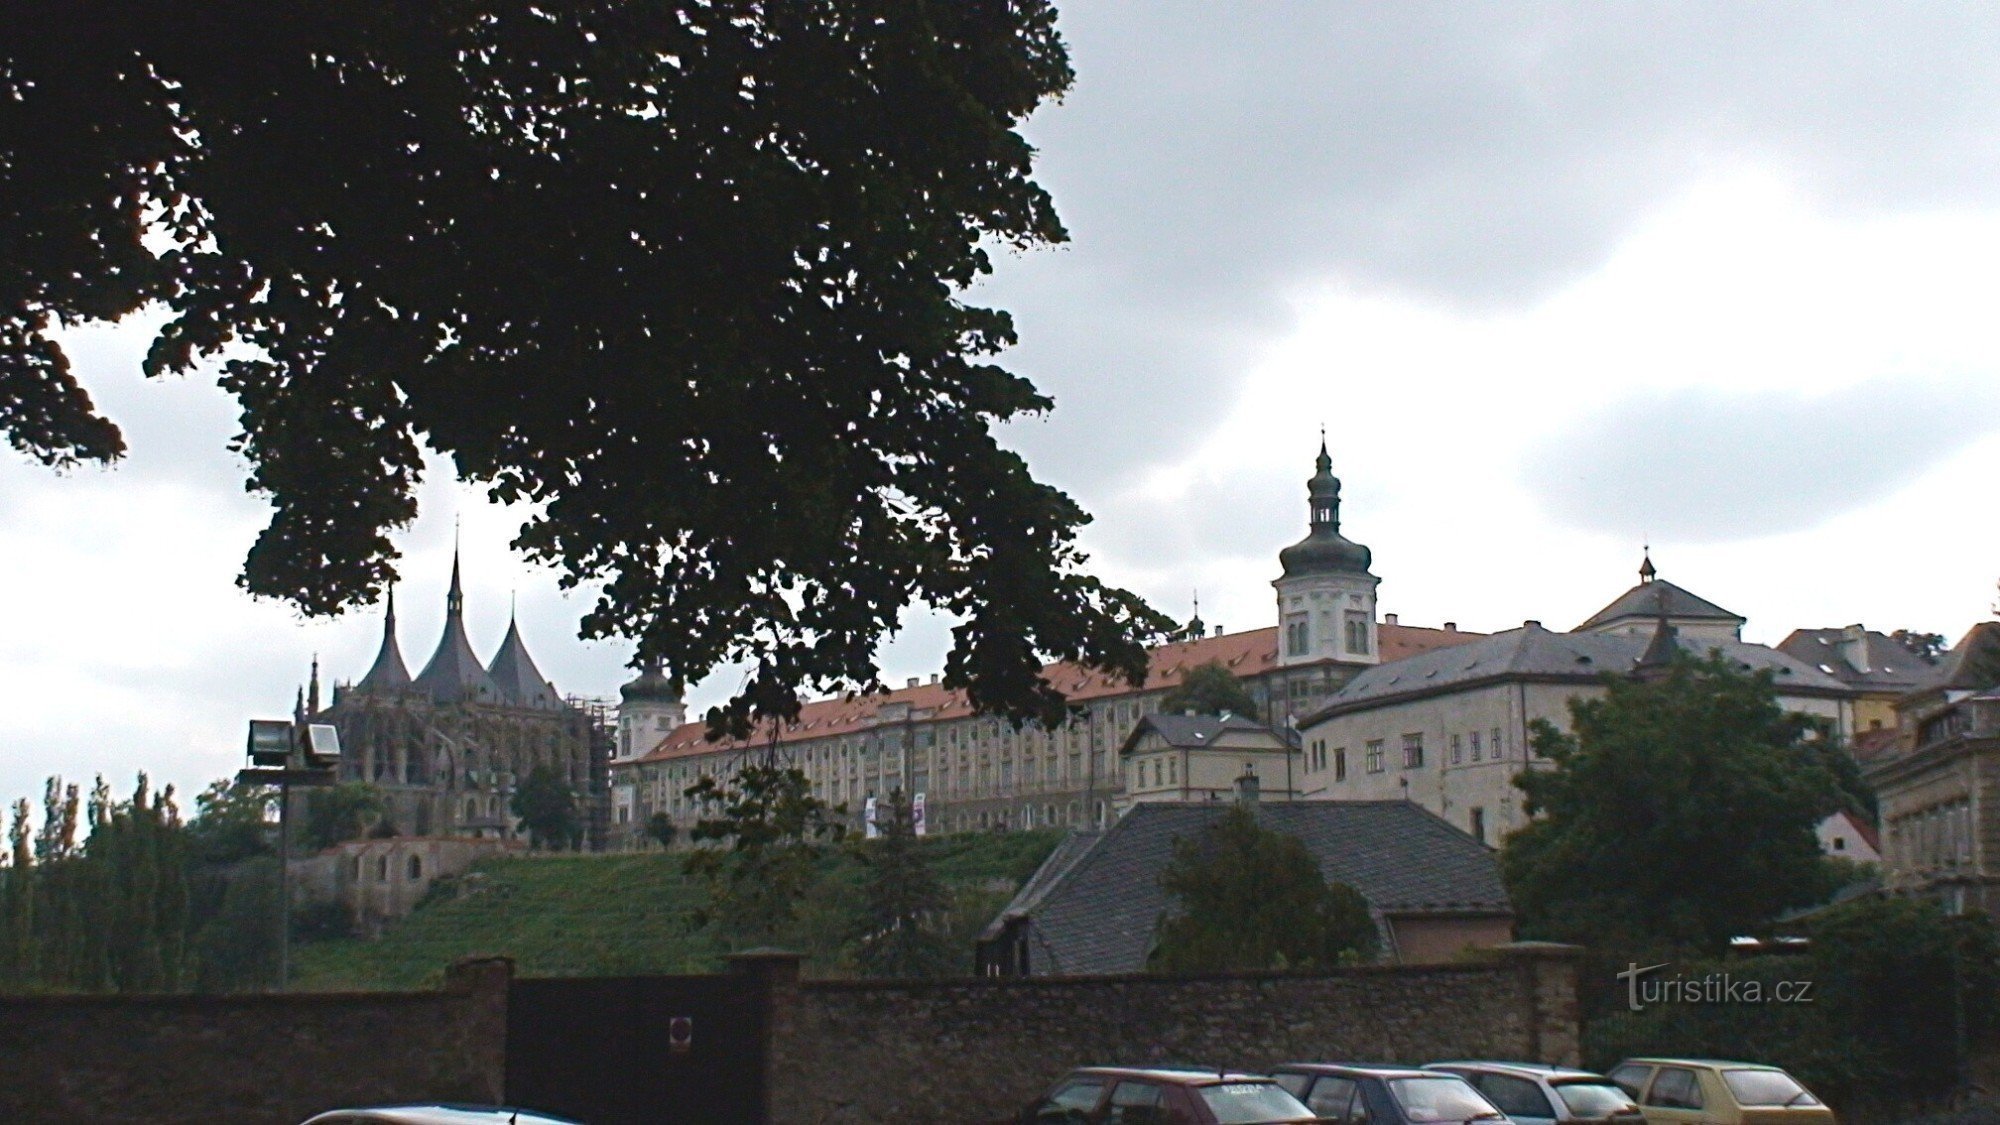 Vedere Kutná Hora asupra Sf. Barbara și a colegiului iezuit